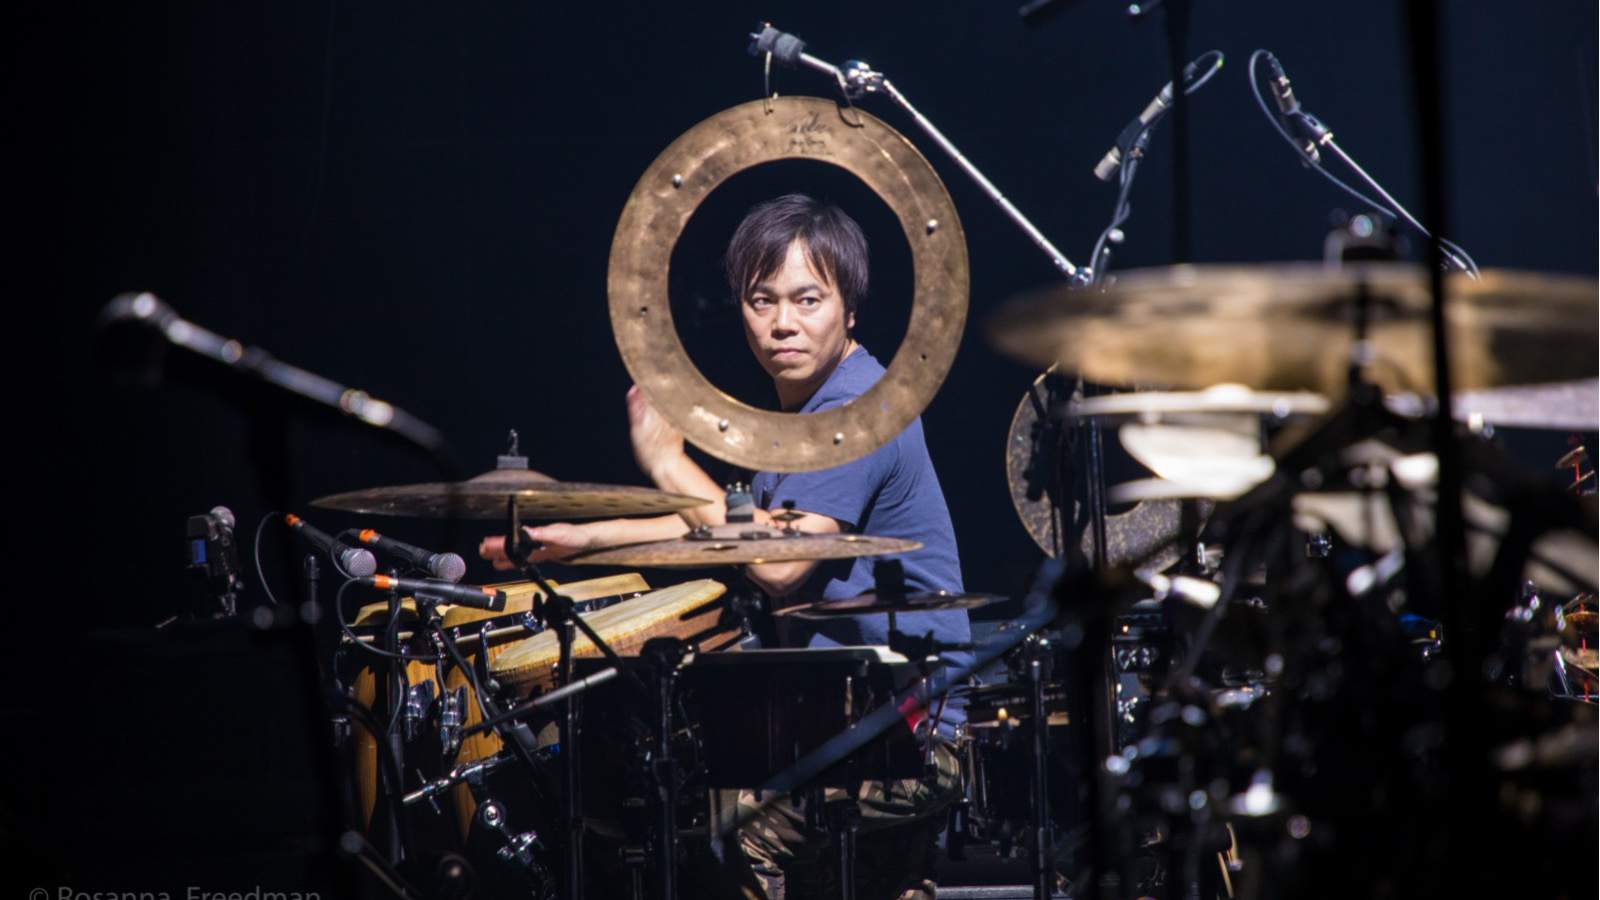 Percussionist Keita Ogawa